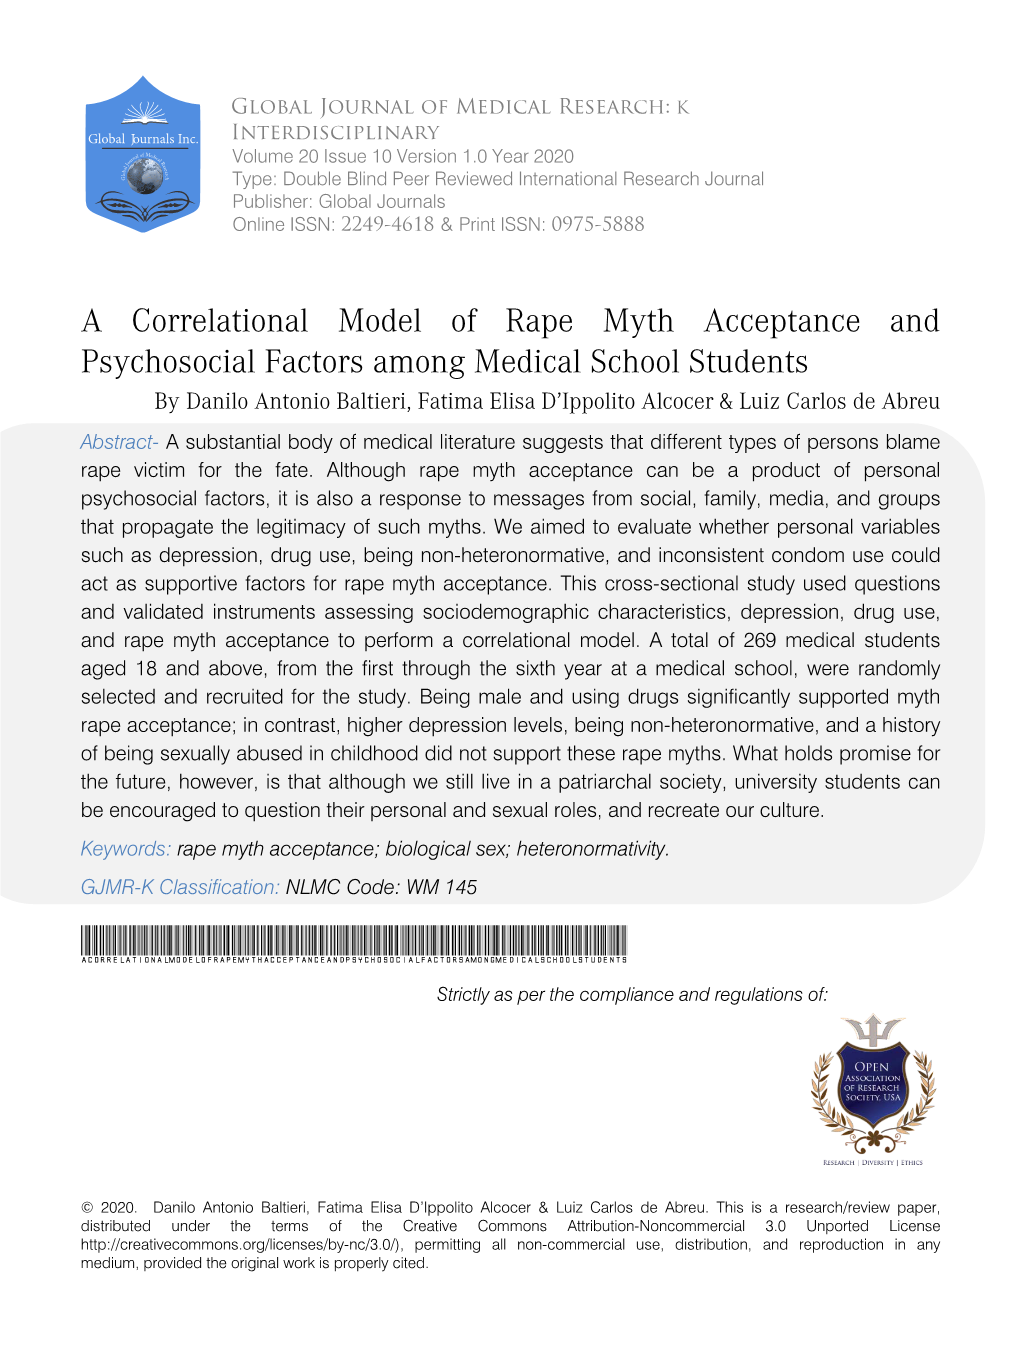 A Correlational Model of Rape Myth Acceptance and Psychosocial Factors Among Medical School Students